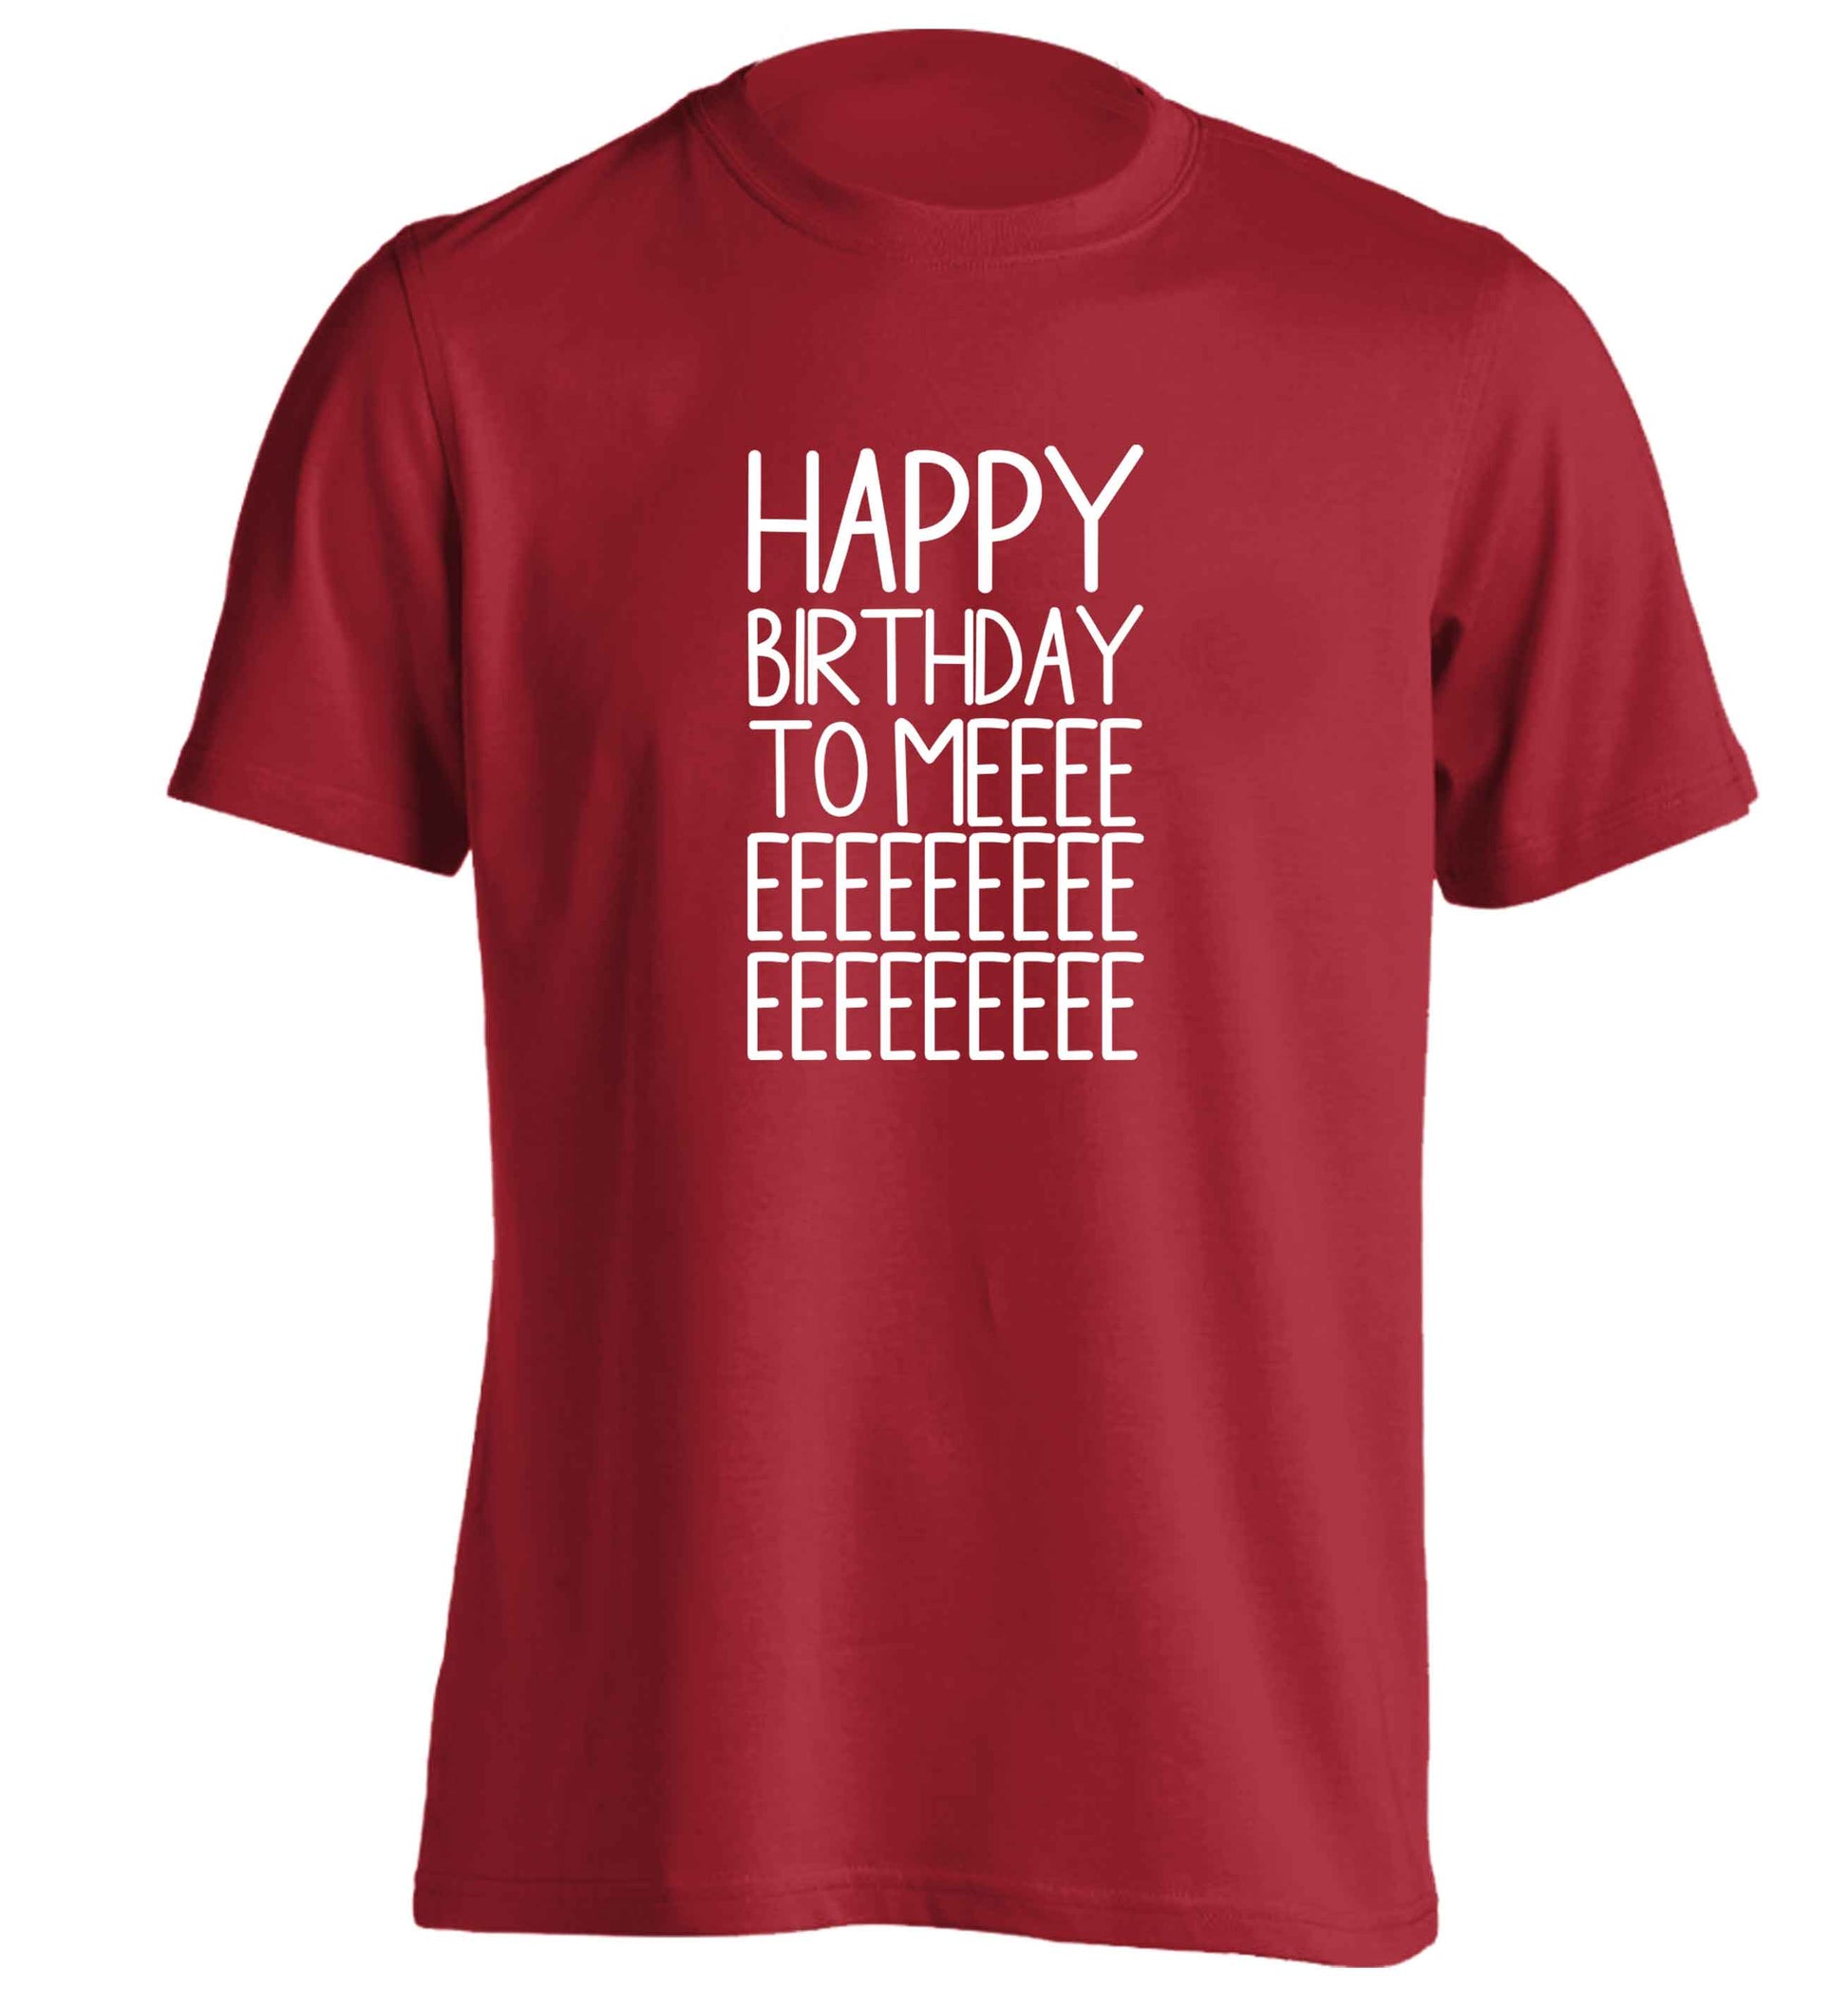 Happy birthday to me adults unisex red Tshirt 2XL